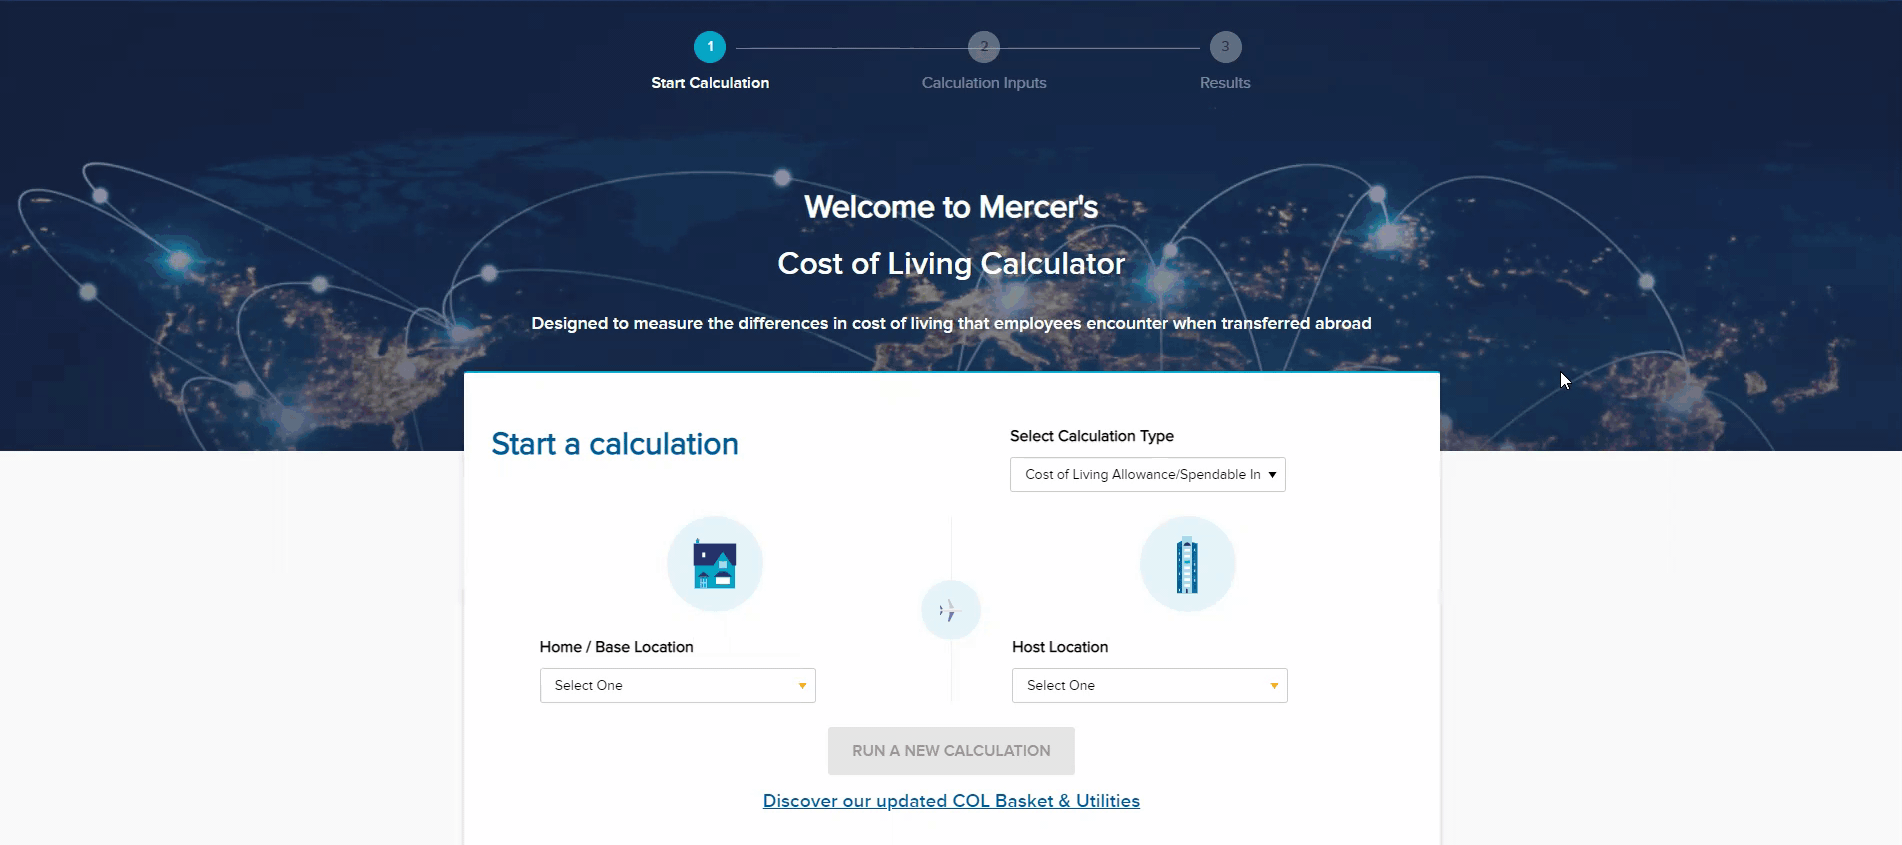 Cost of Living Calculator 2.0 welcome screen